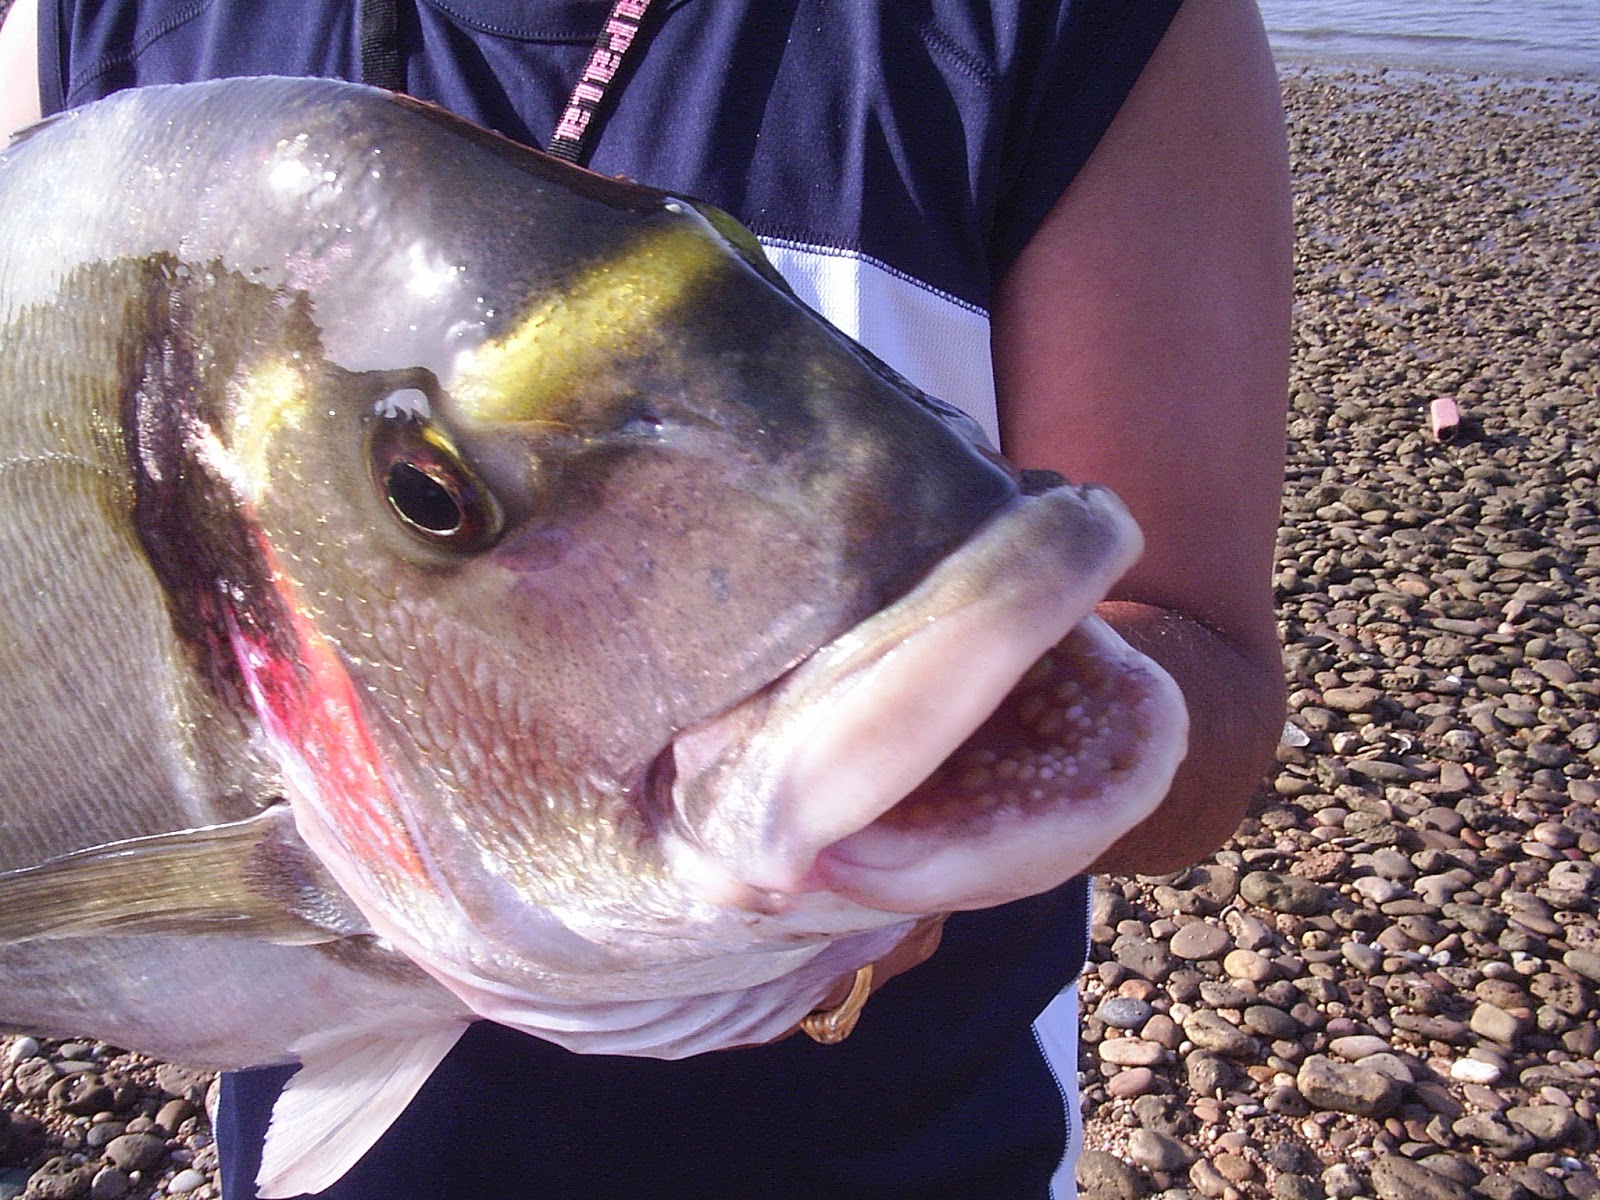 Pescar doradas a spinning: cómo engañar con un señuelo a este astuto pez en nuestras costas